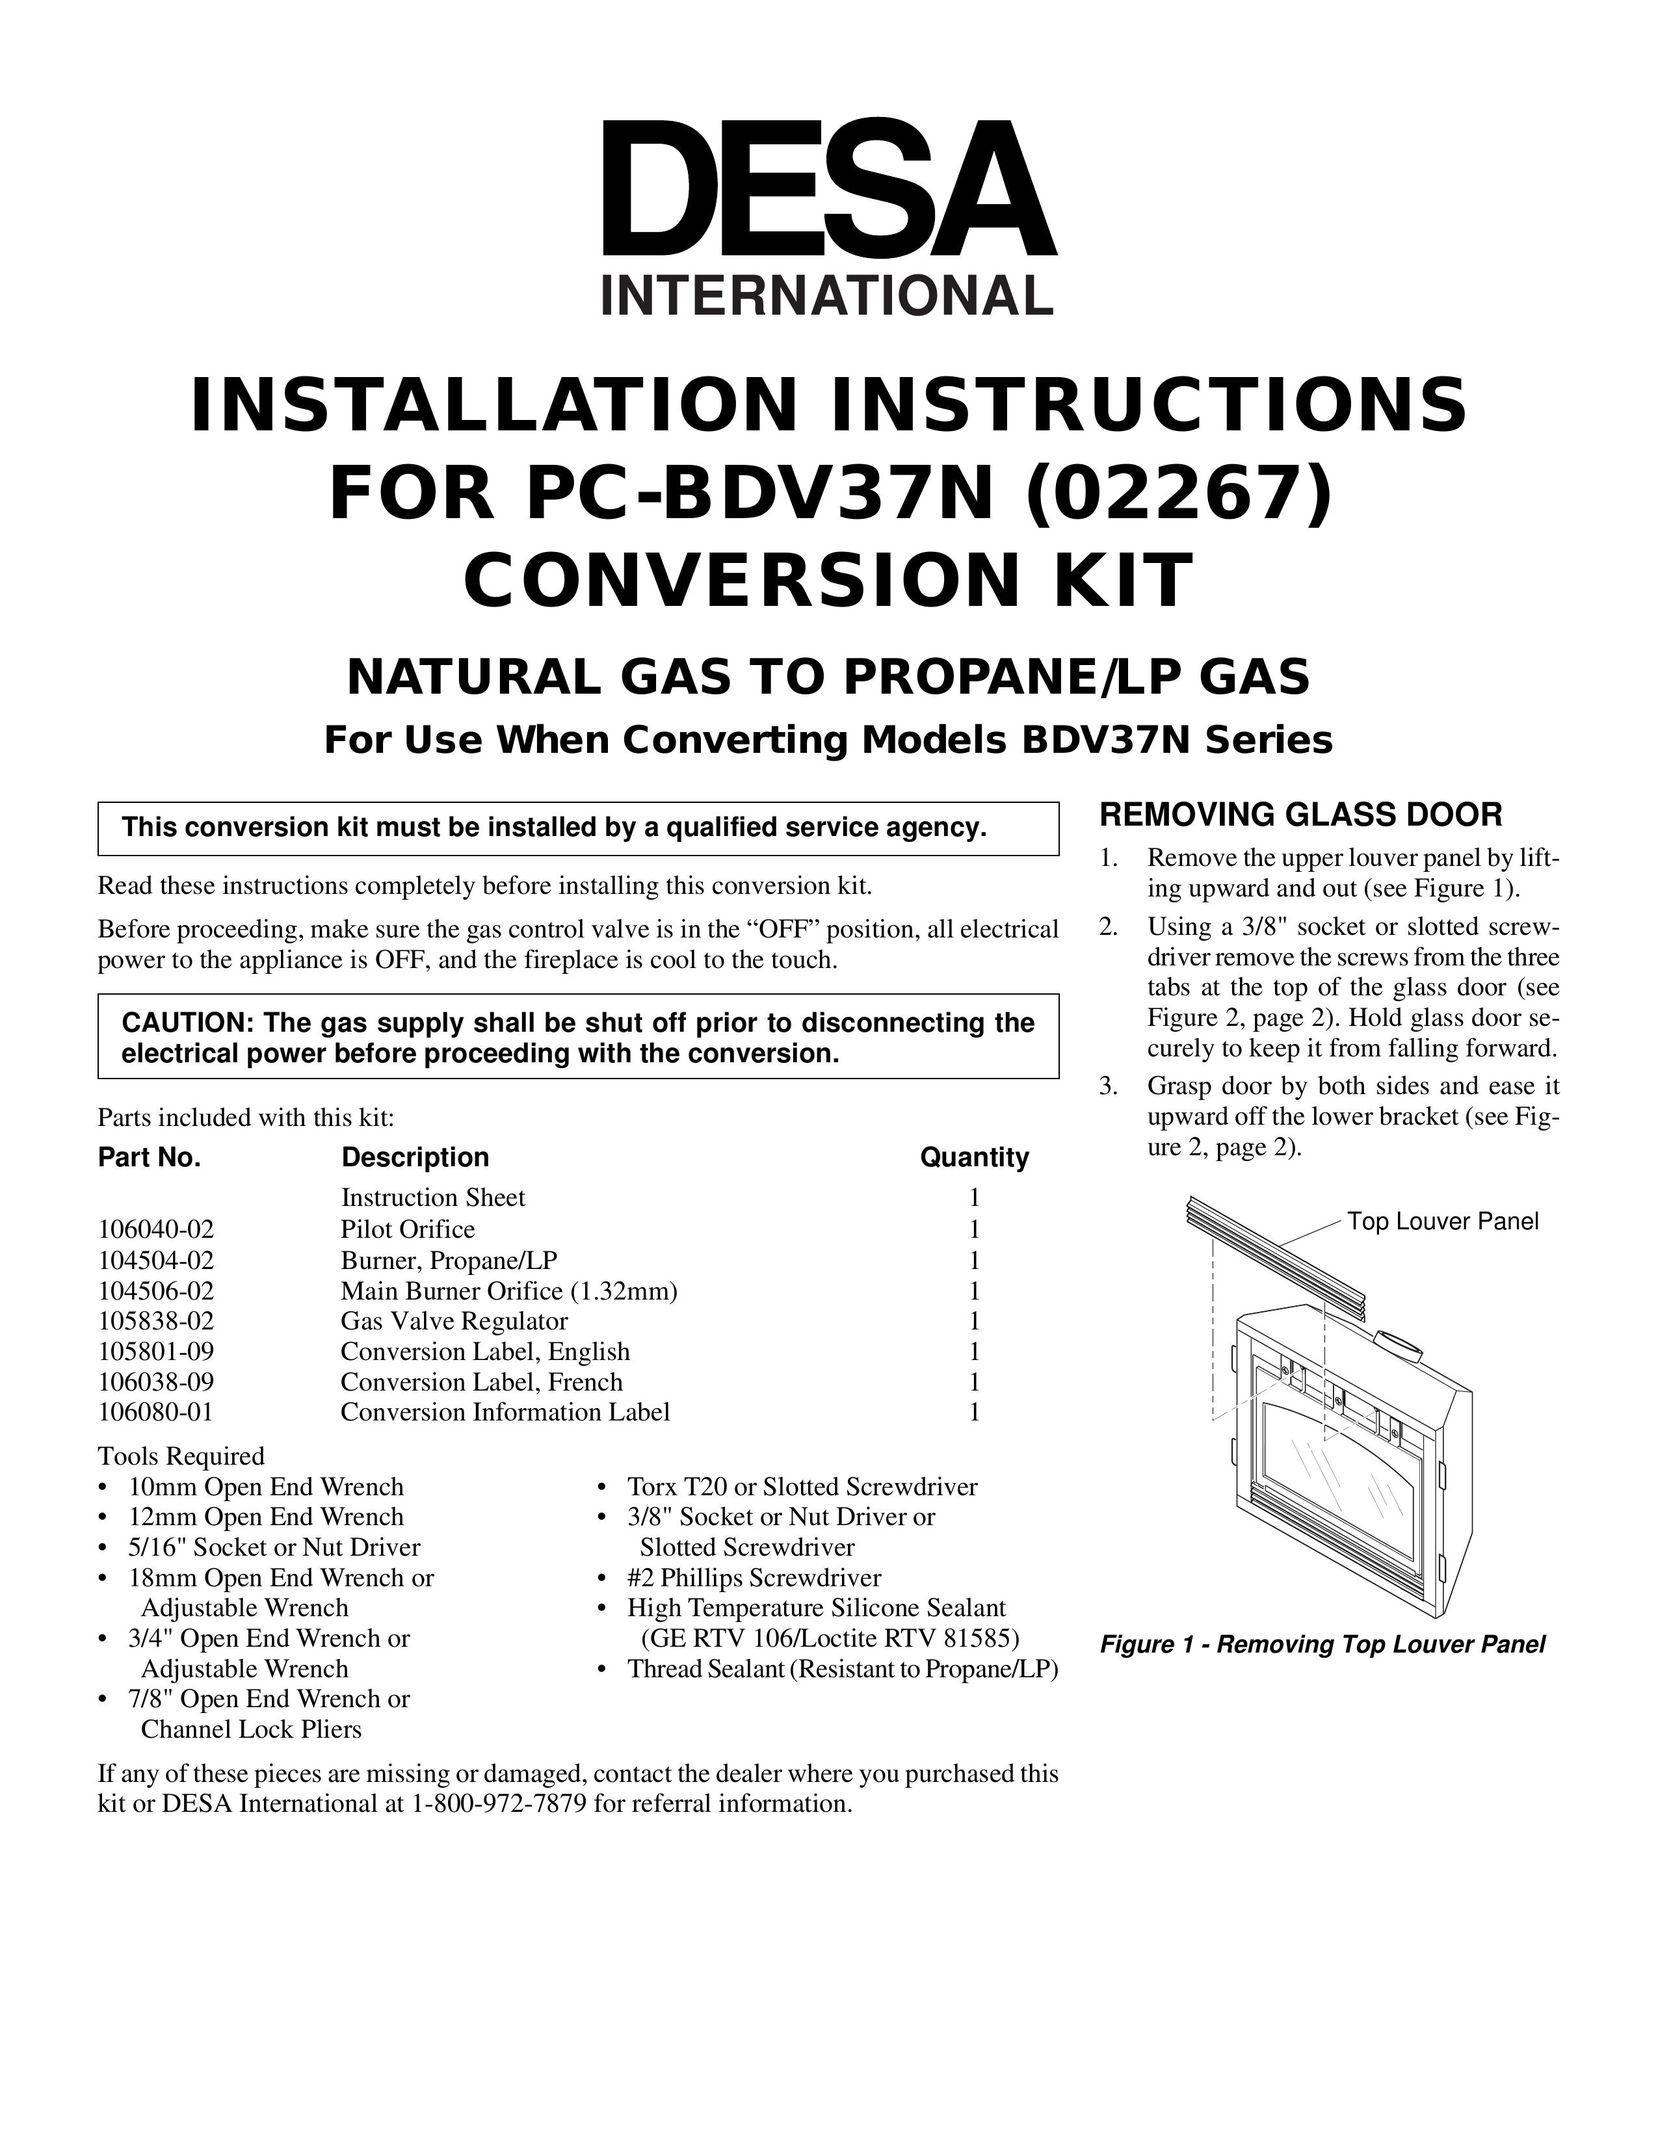 Desa 106038-09 Electric Heater User Manual